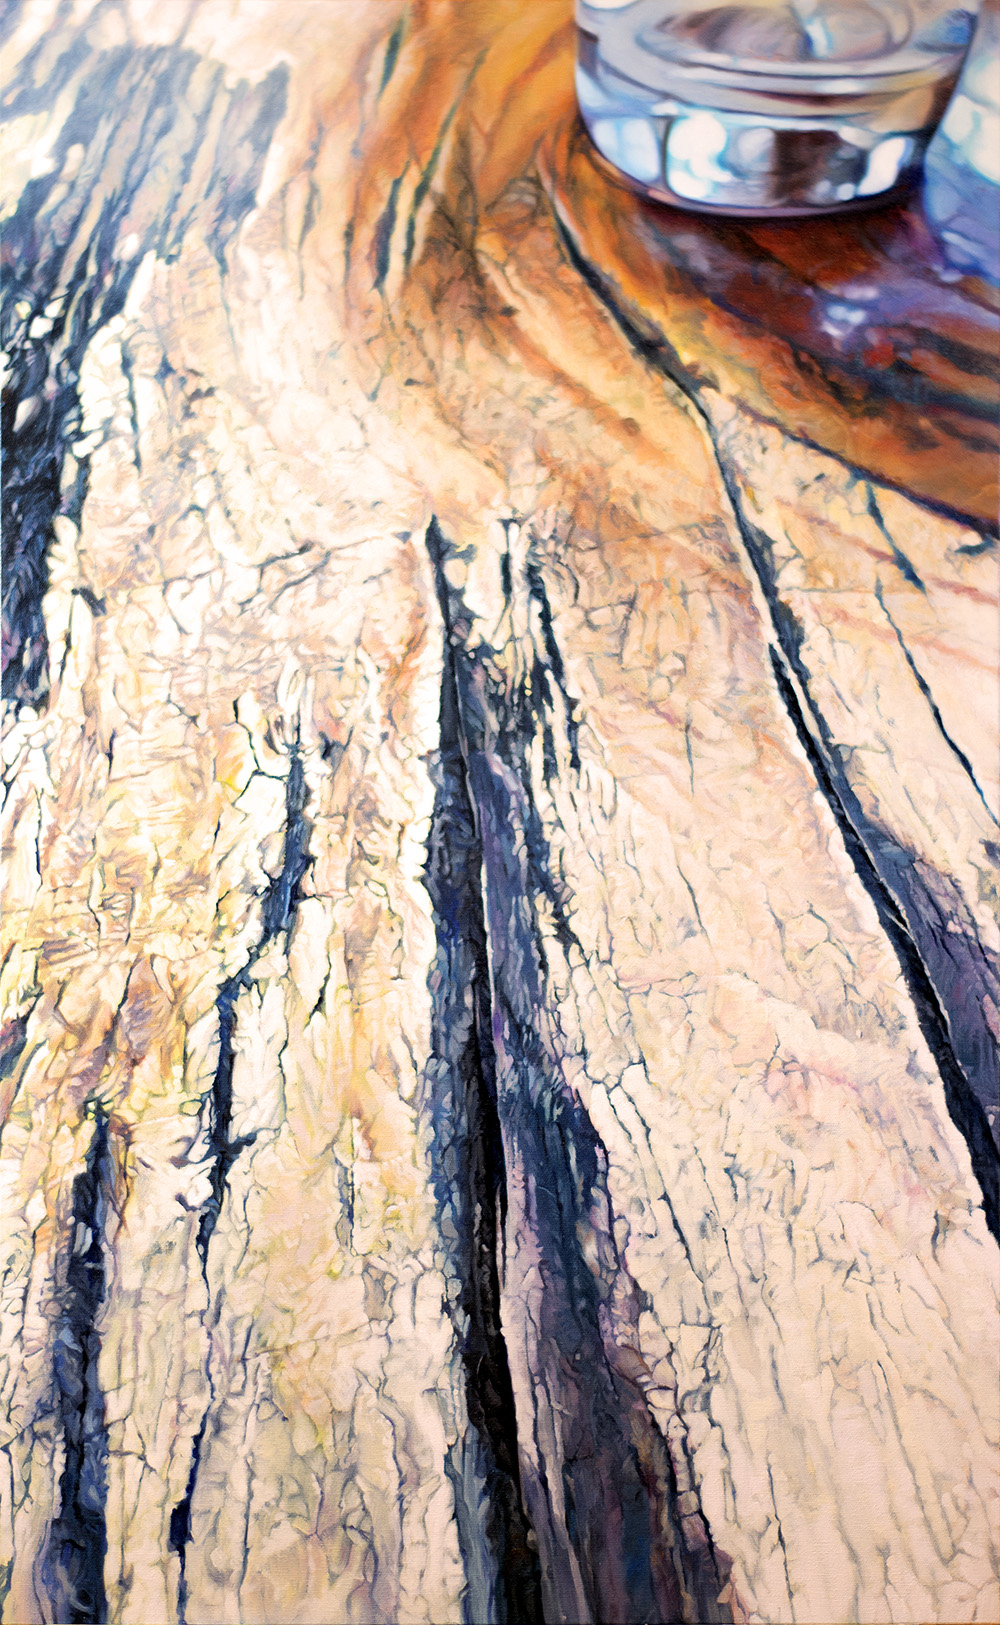 
'Madera'
(2017)
óleo sobre lienzo,
100x60 cm
